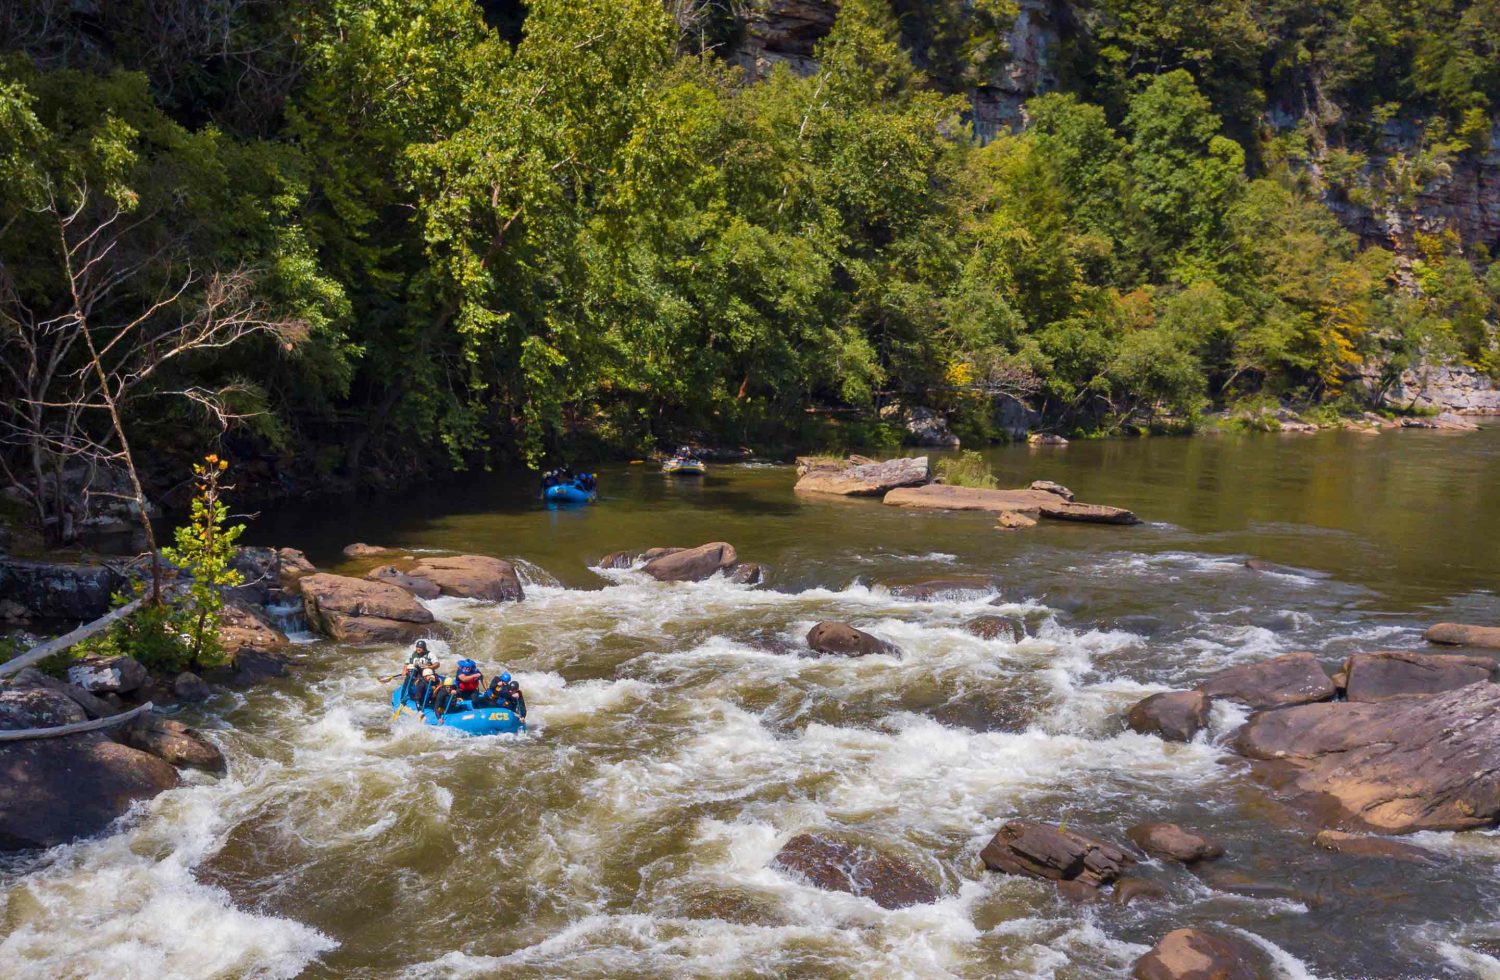 An ACE Adventure Resort raft enters Junkyard Rapid on a Lower Gauley rafting trip in West Virginia.